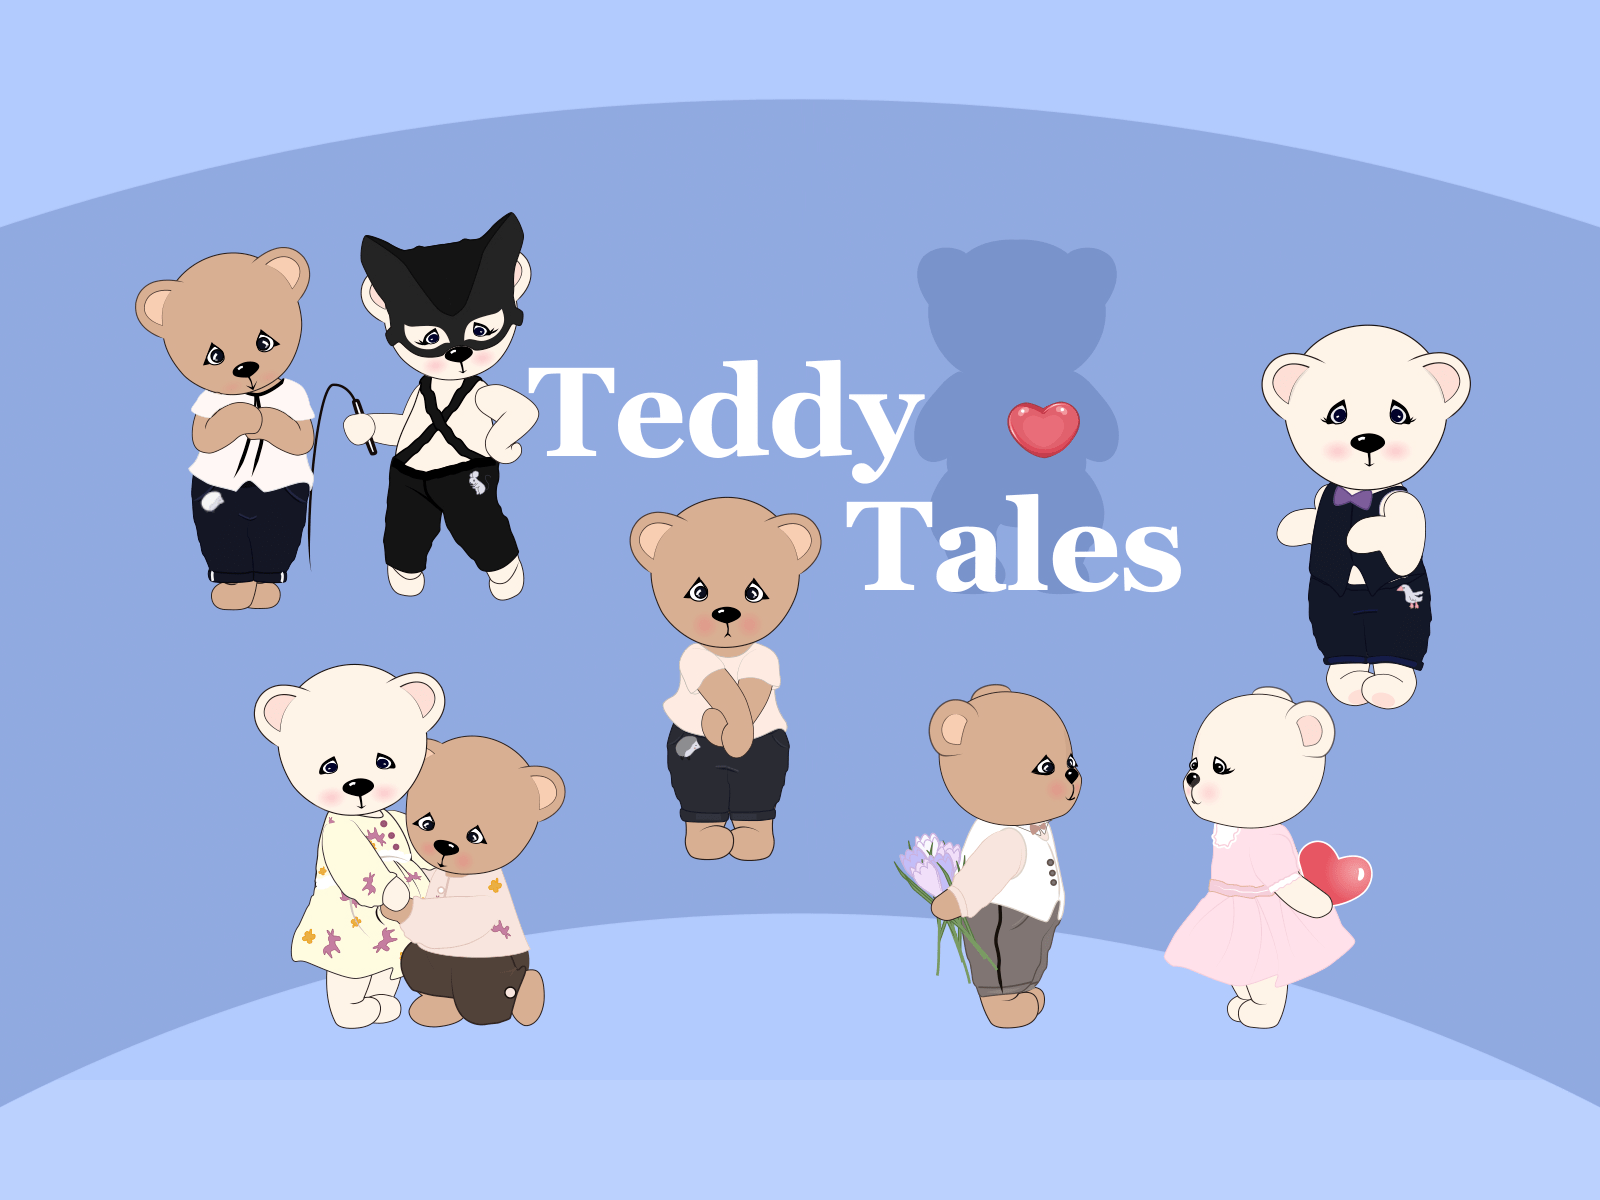 TeddyTales stickers pack on Instagram/Telegram/WhatsApp animation animation design bears cartoon motion design teddy teddybears